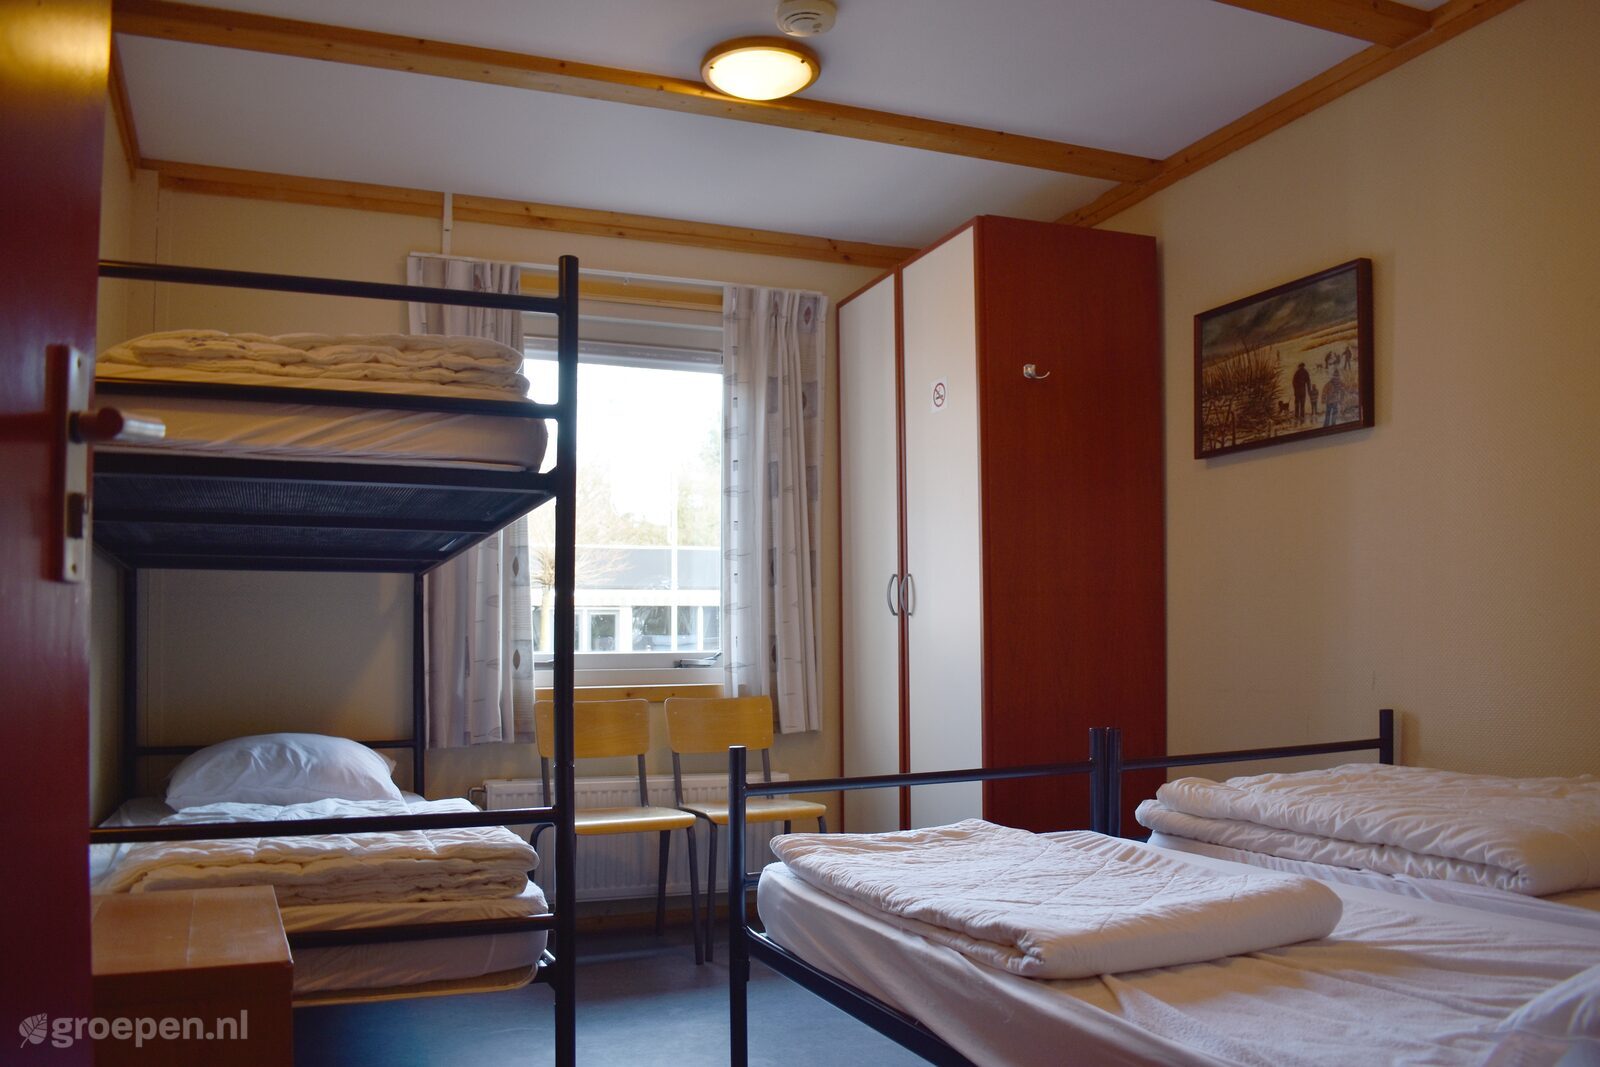 Group accommodation Kraggenburg